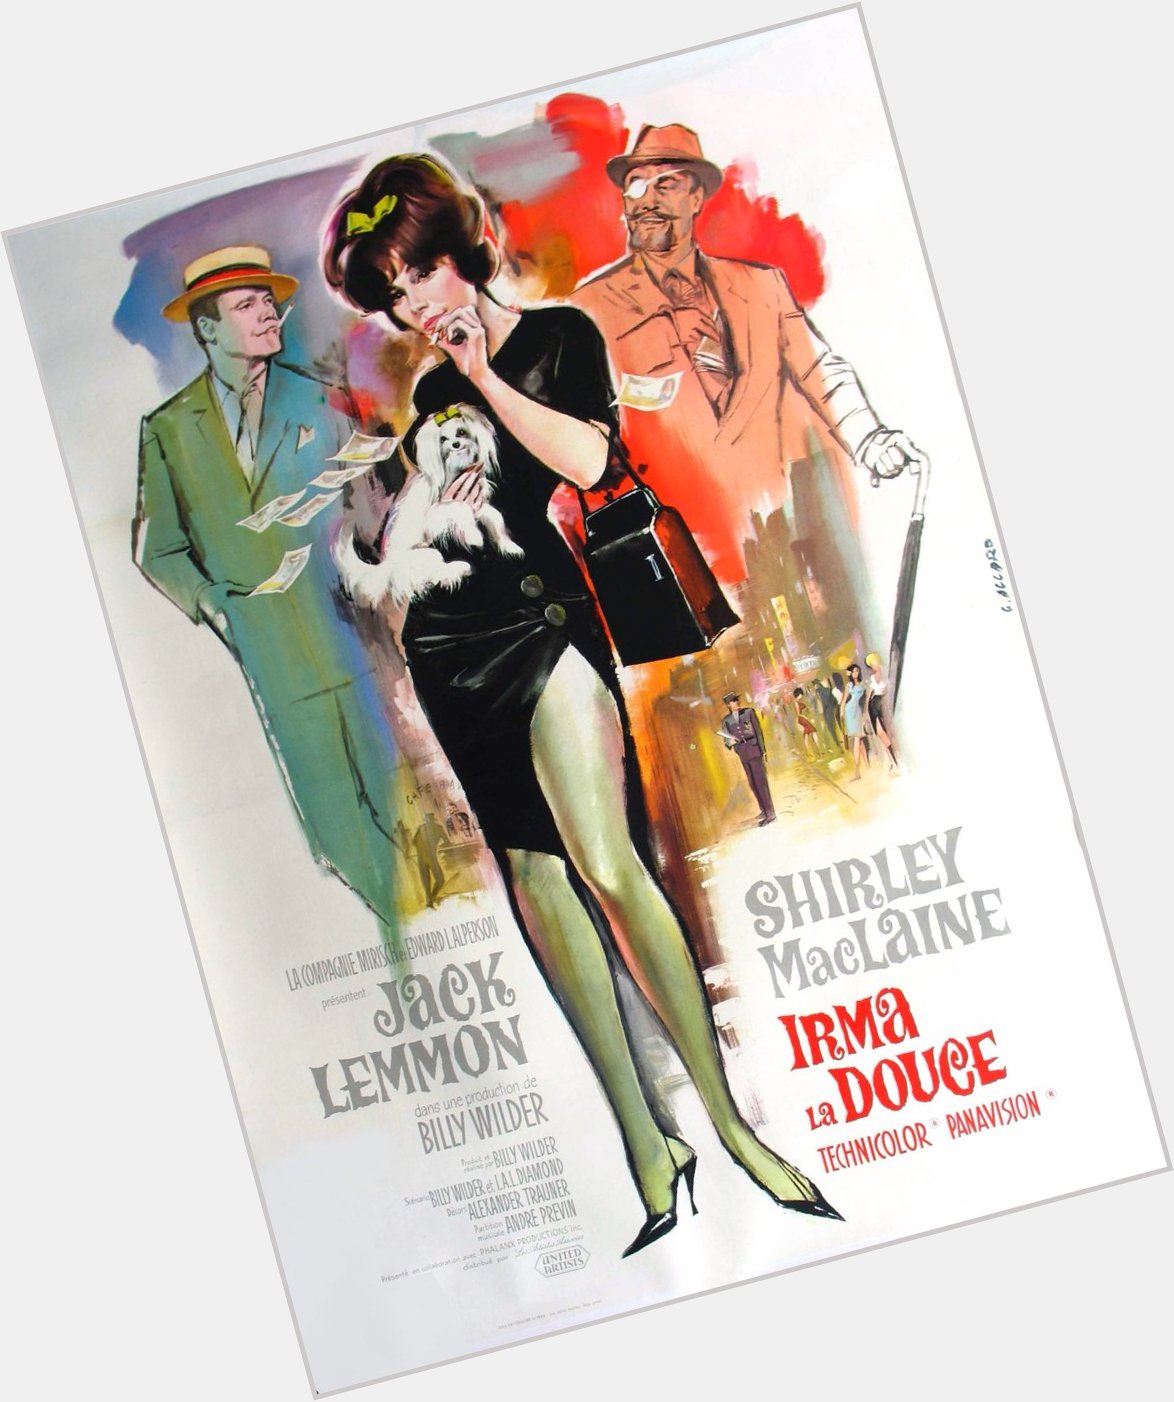 Happy birthday to Shirley MacLaine - IRMA LA DOUCE - 1963 - French release poster - Art by Gilbert Allard 